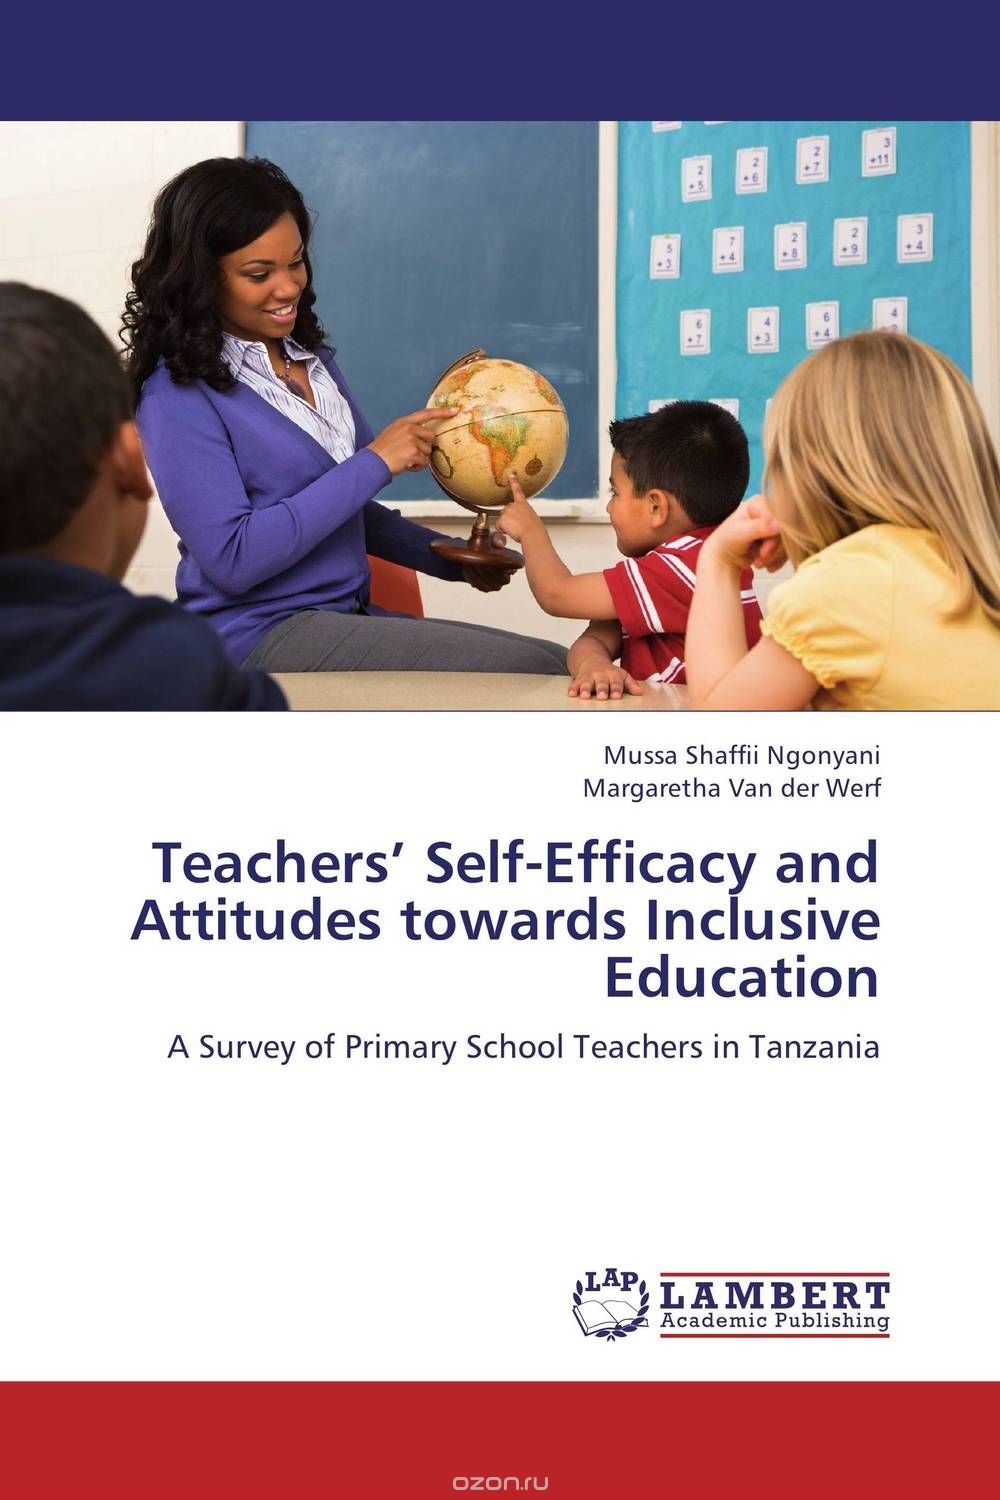 Скачать книгу "Teachers’ Self-Efficacy and Attitudes towards Inclusive Education"